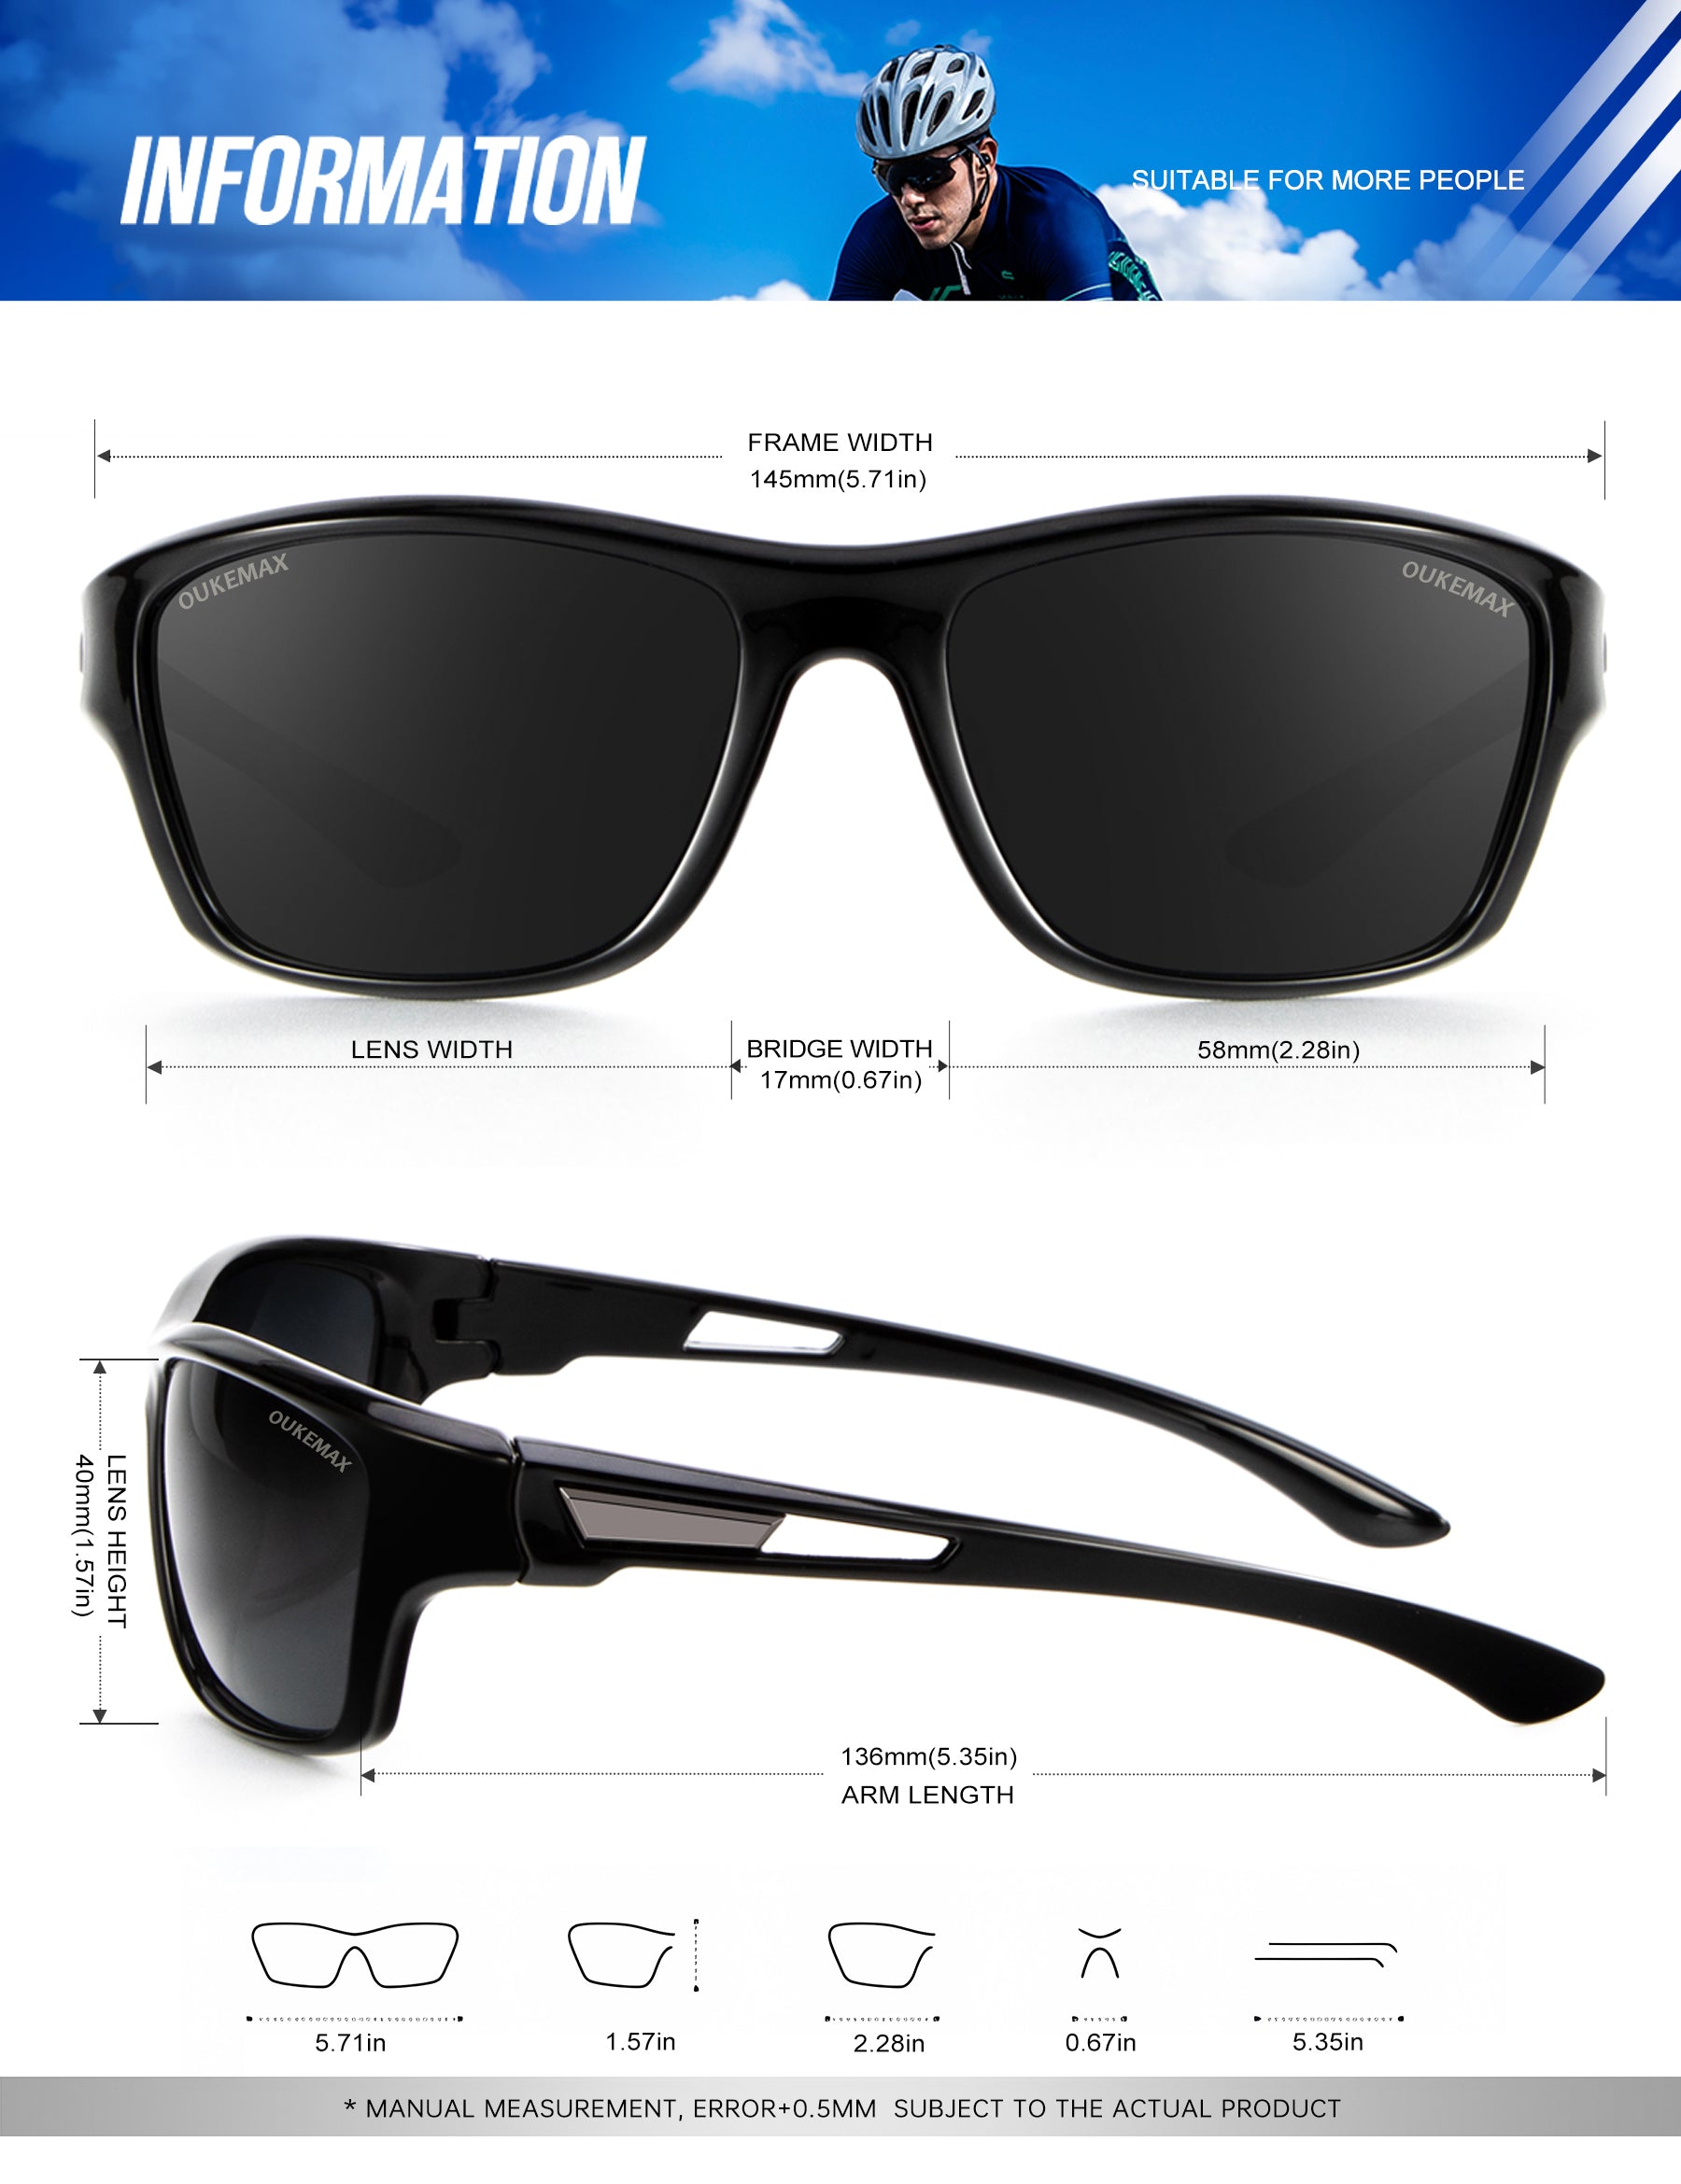 OUKEMAX Sports Sunglasses S63-1